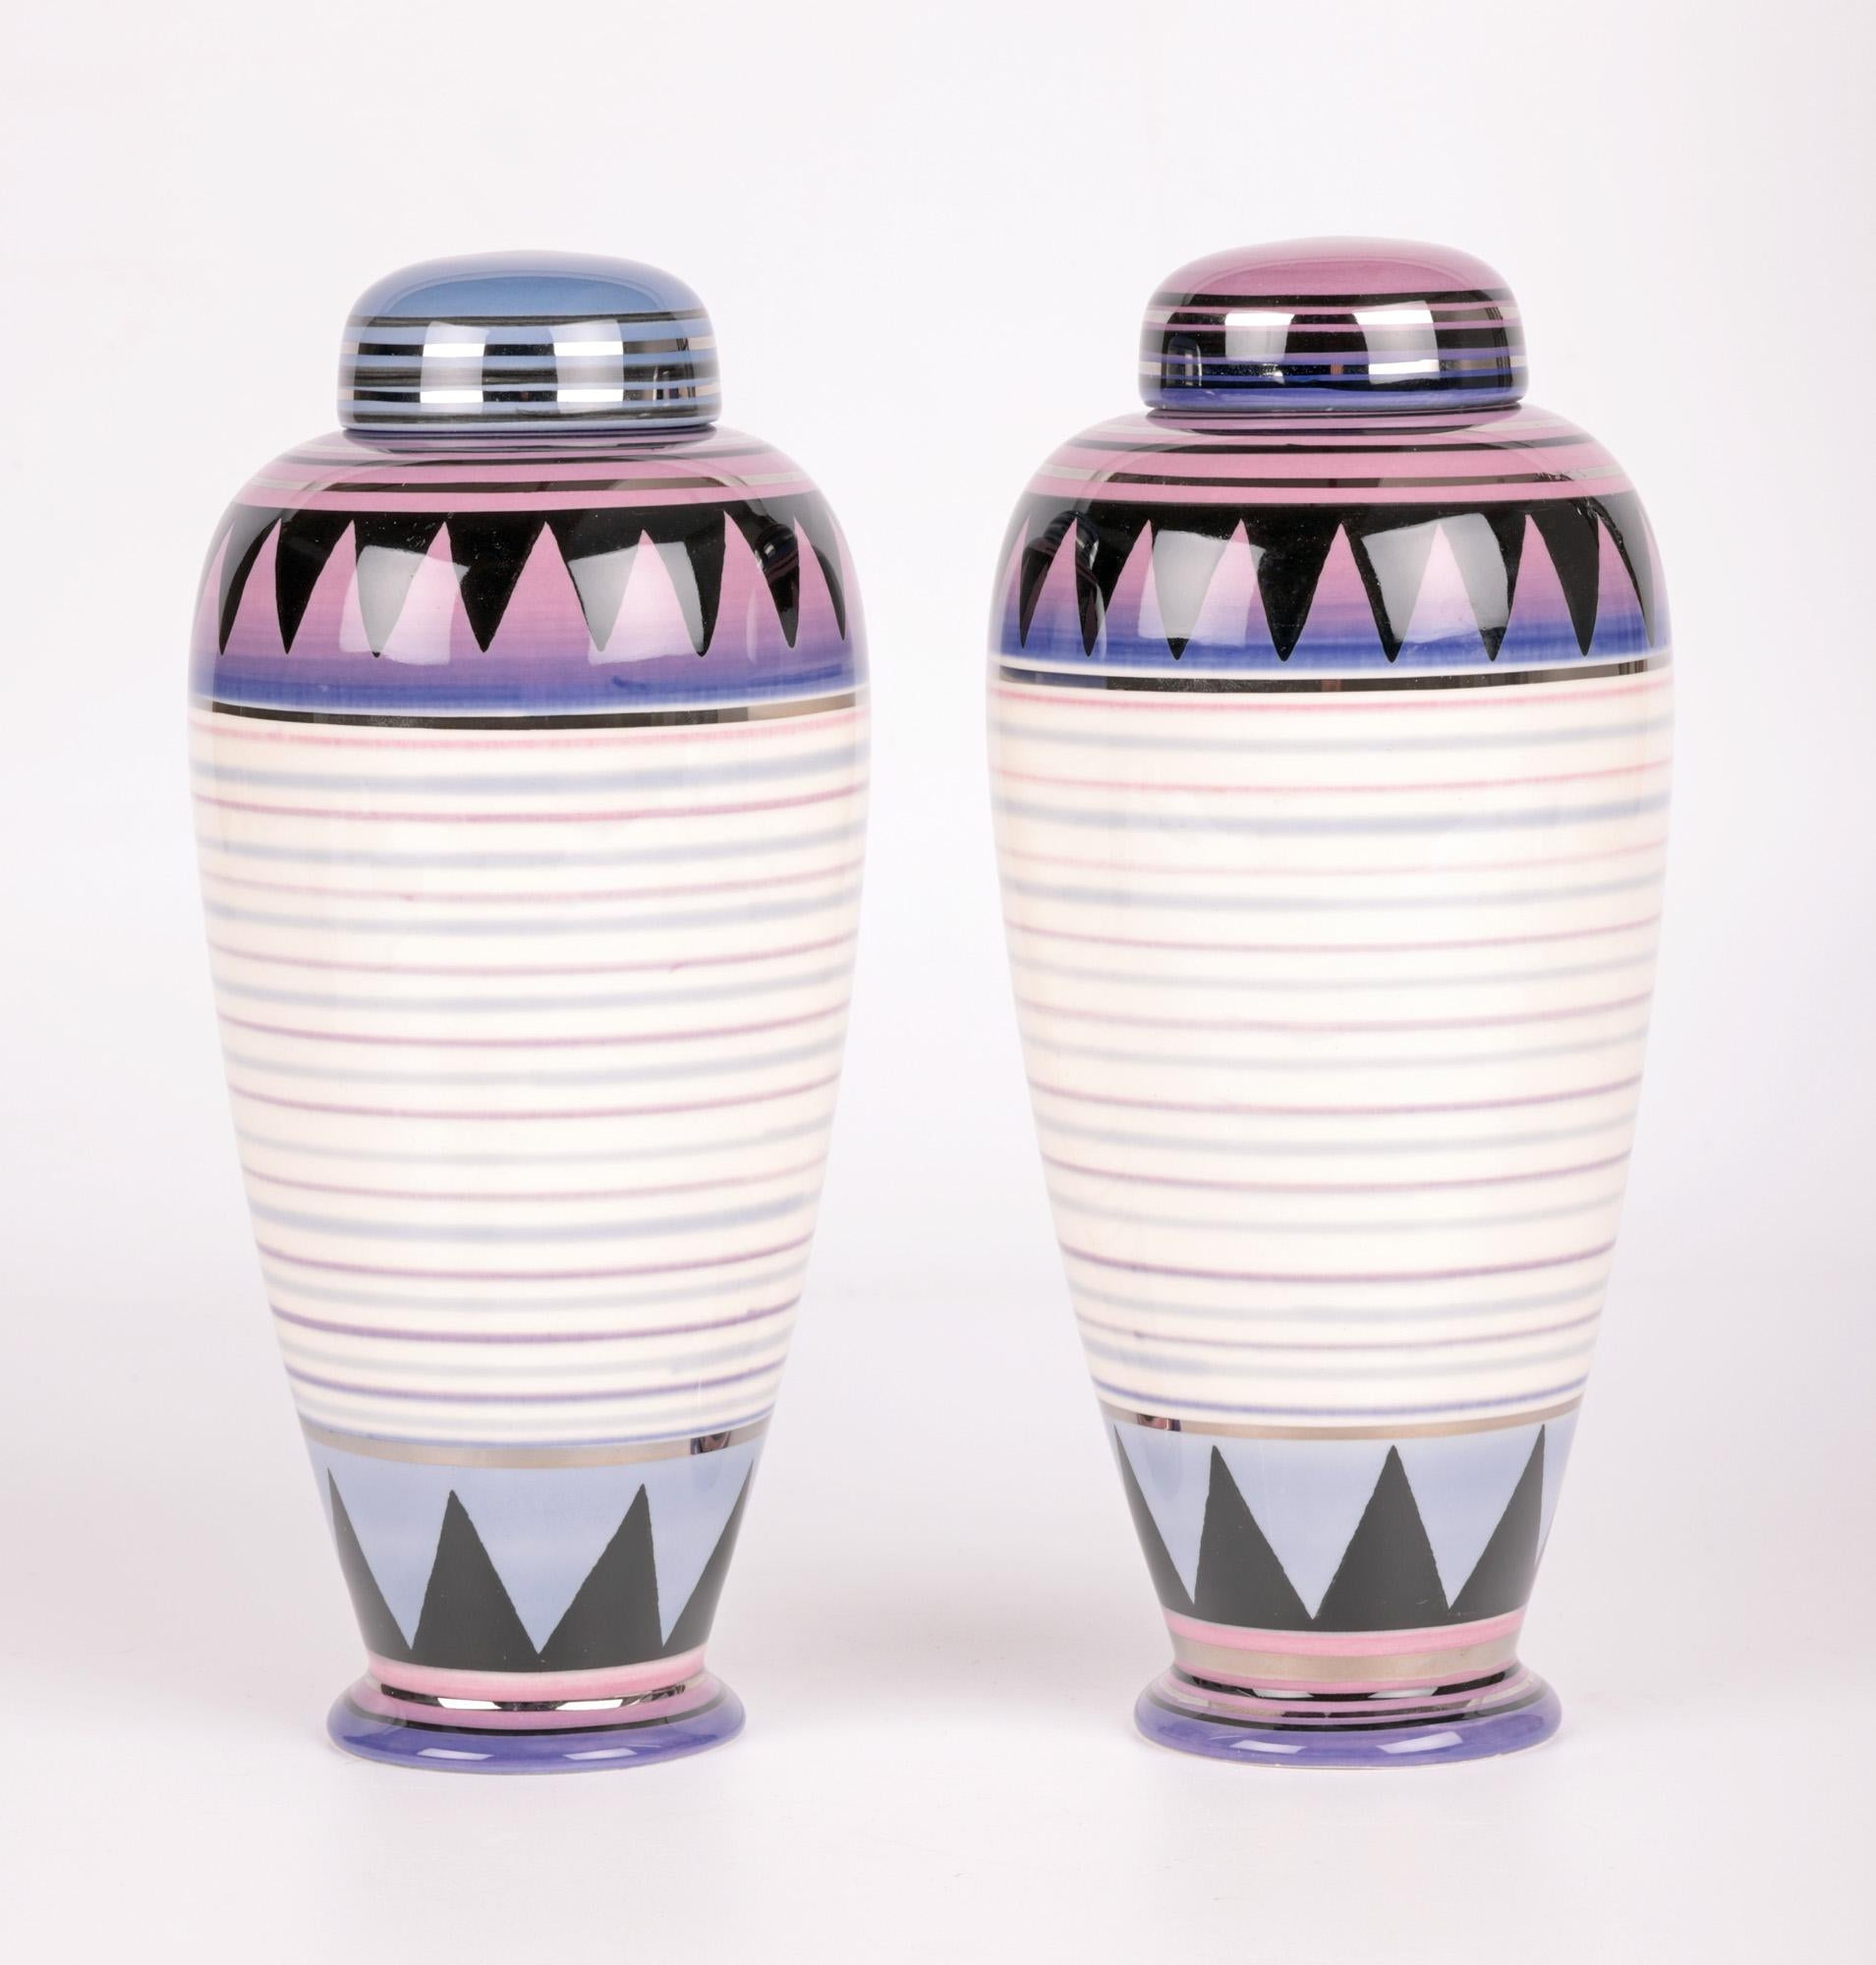 Moorland Pottery Pair Ceramic Lustre Lidded Vases   For Sale 3